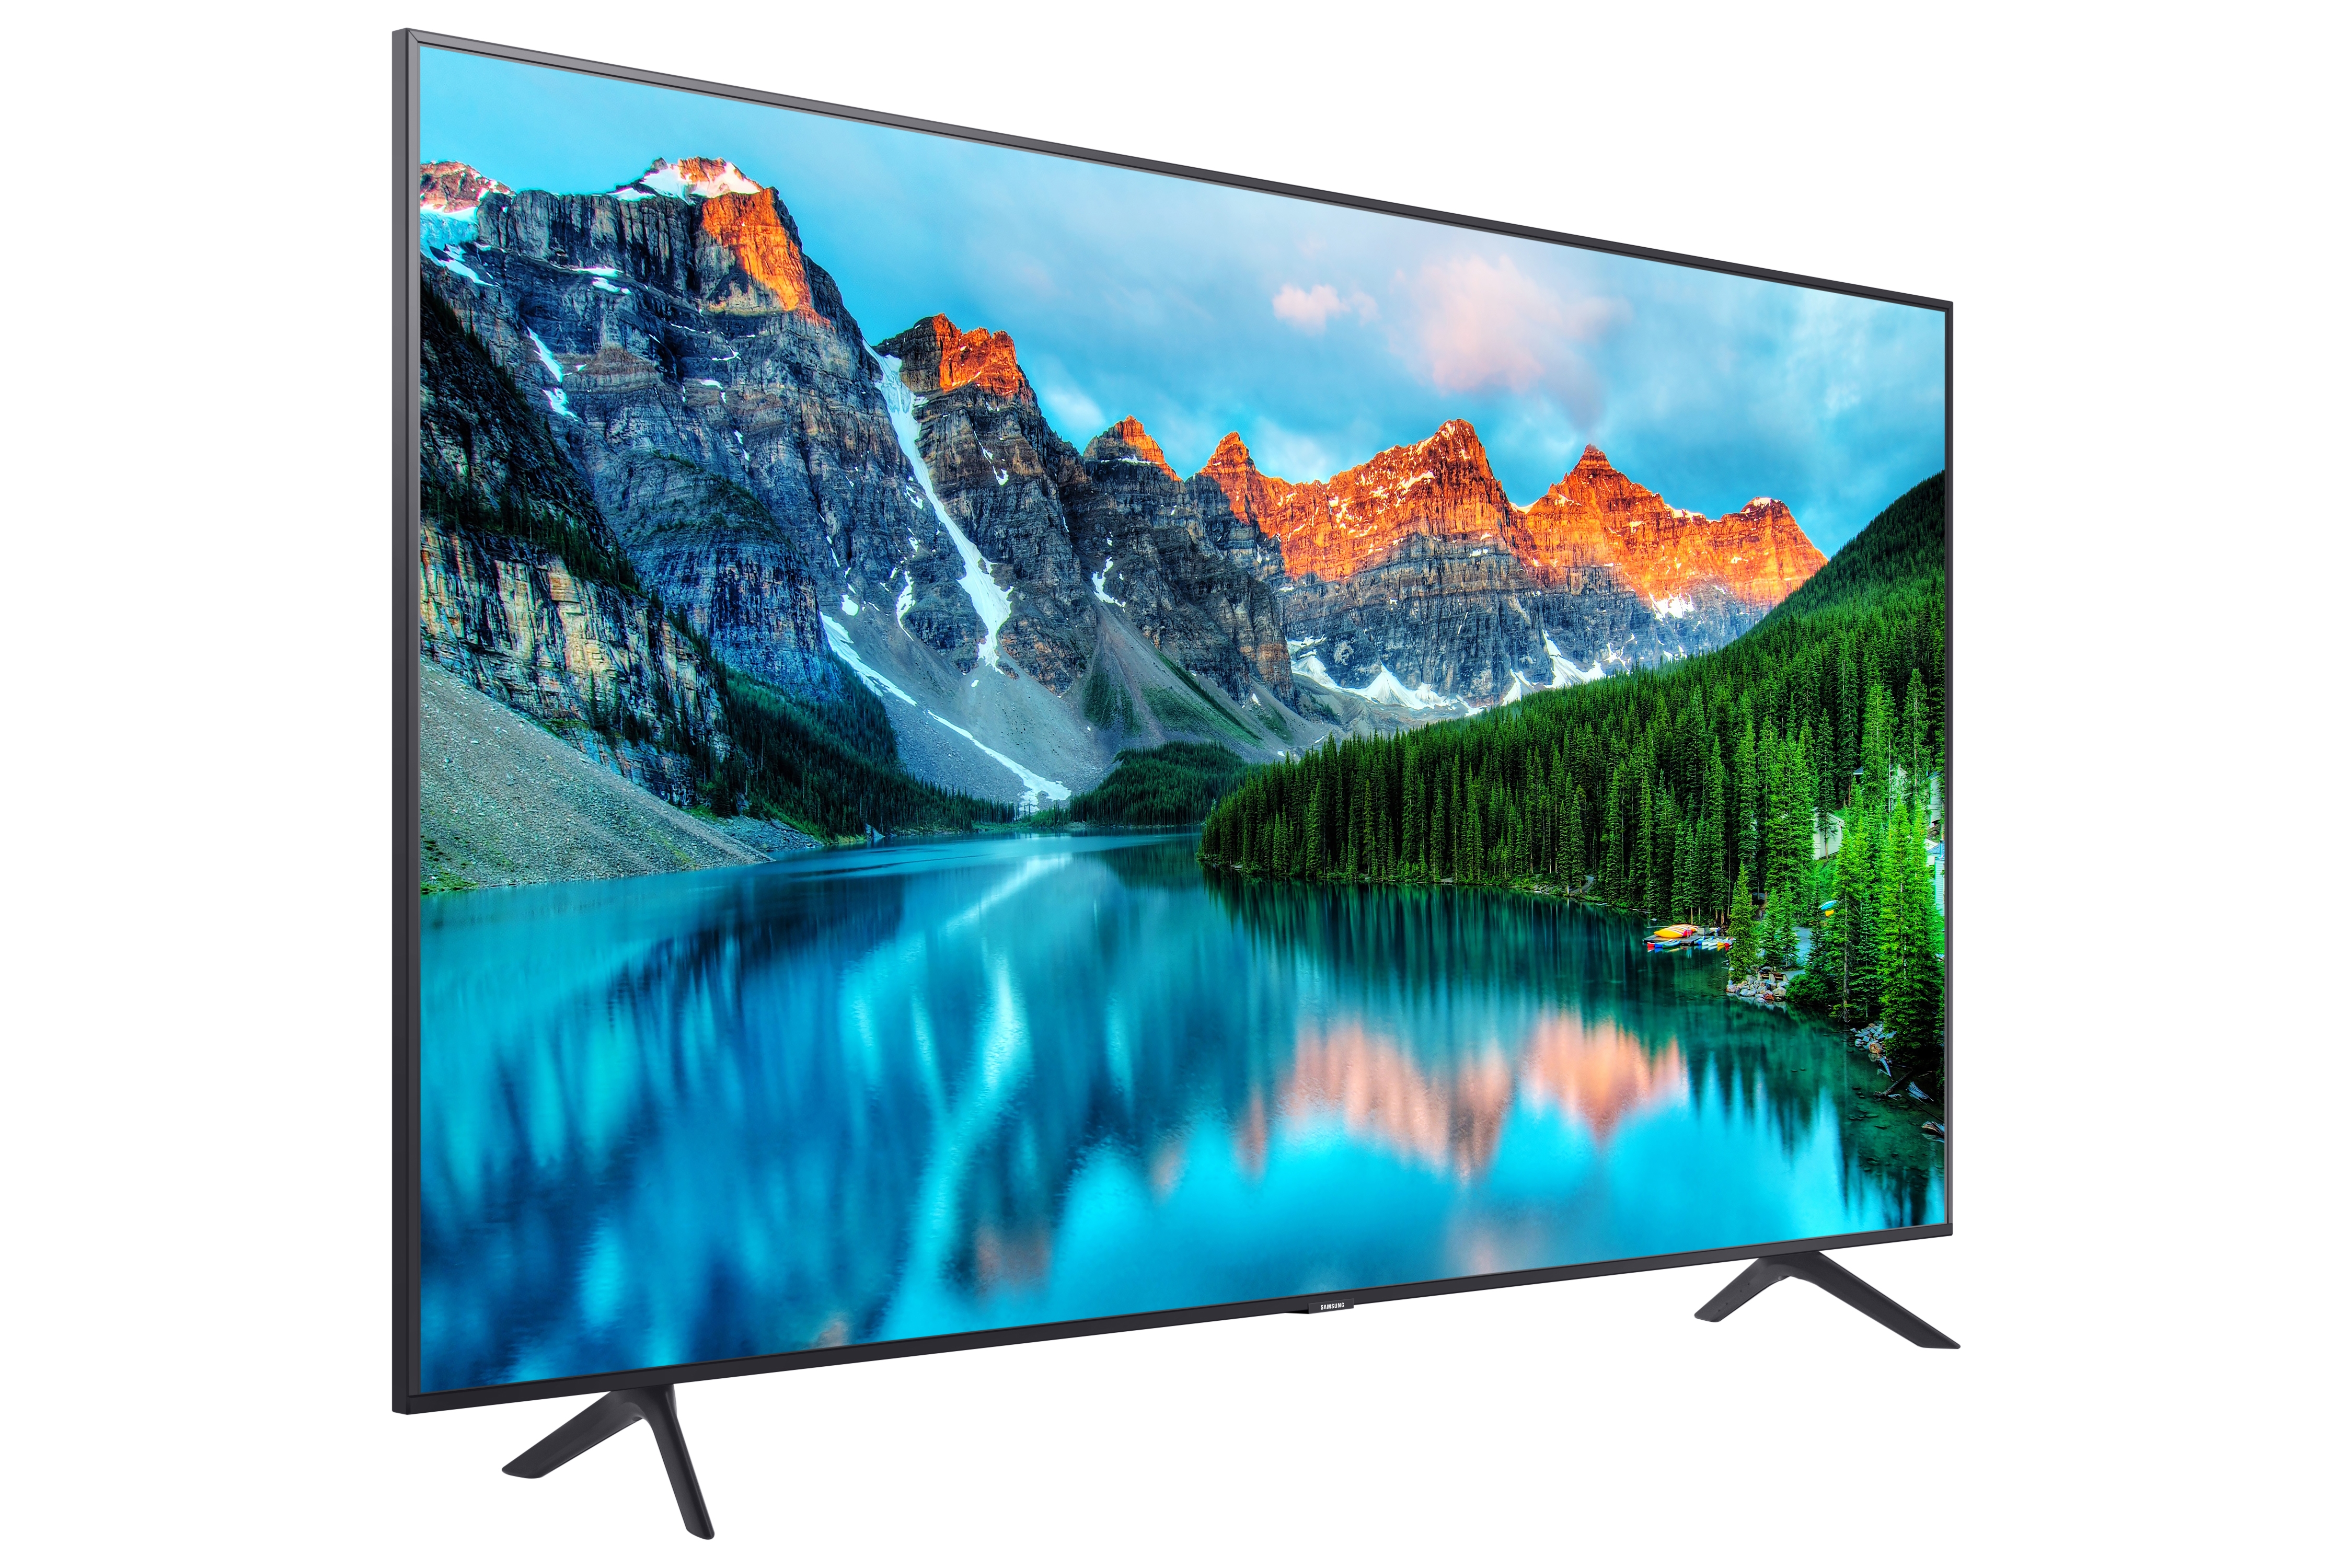 Thumbnail image of 55” BET-H Series Crystal UHD 4K Pro TV